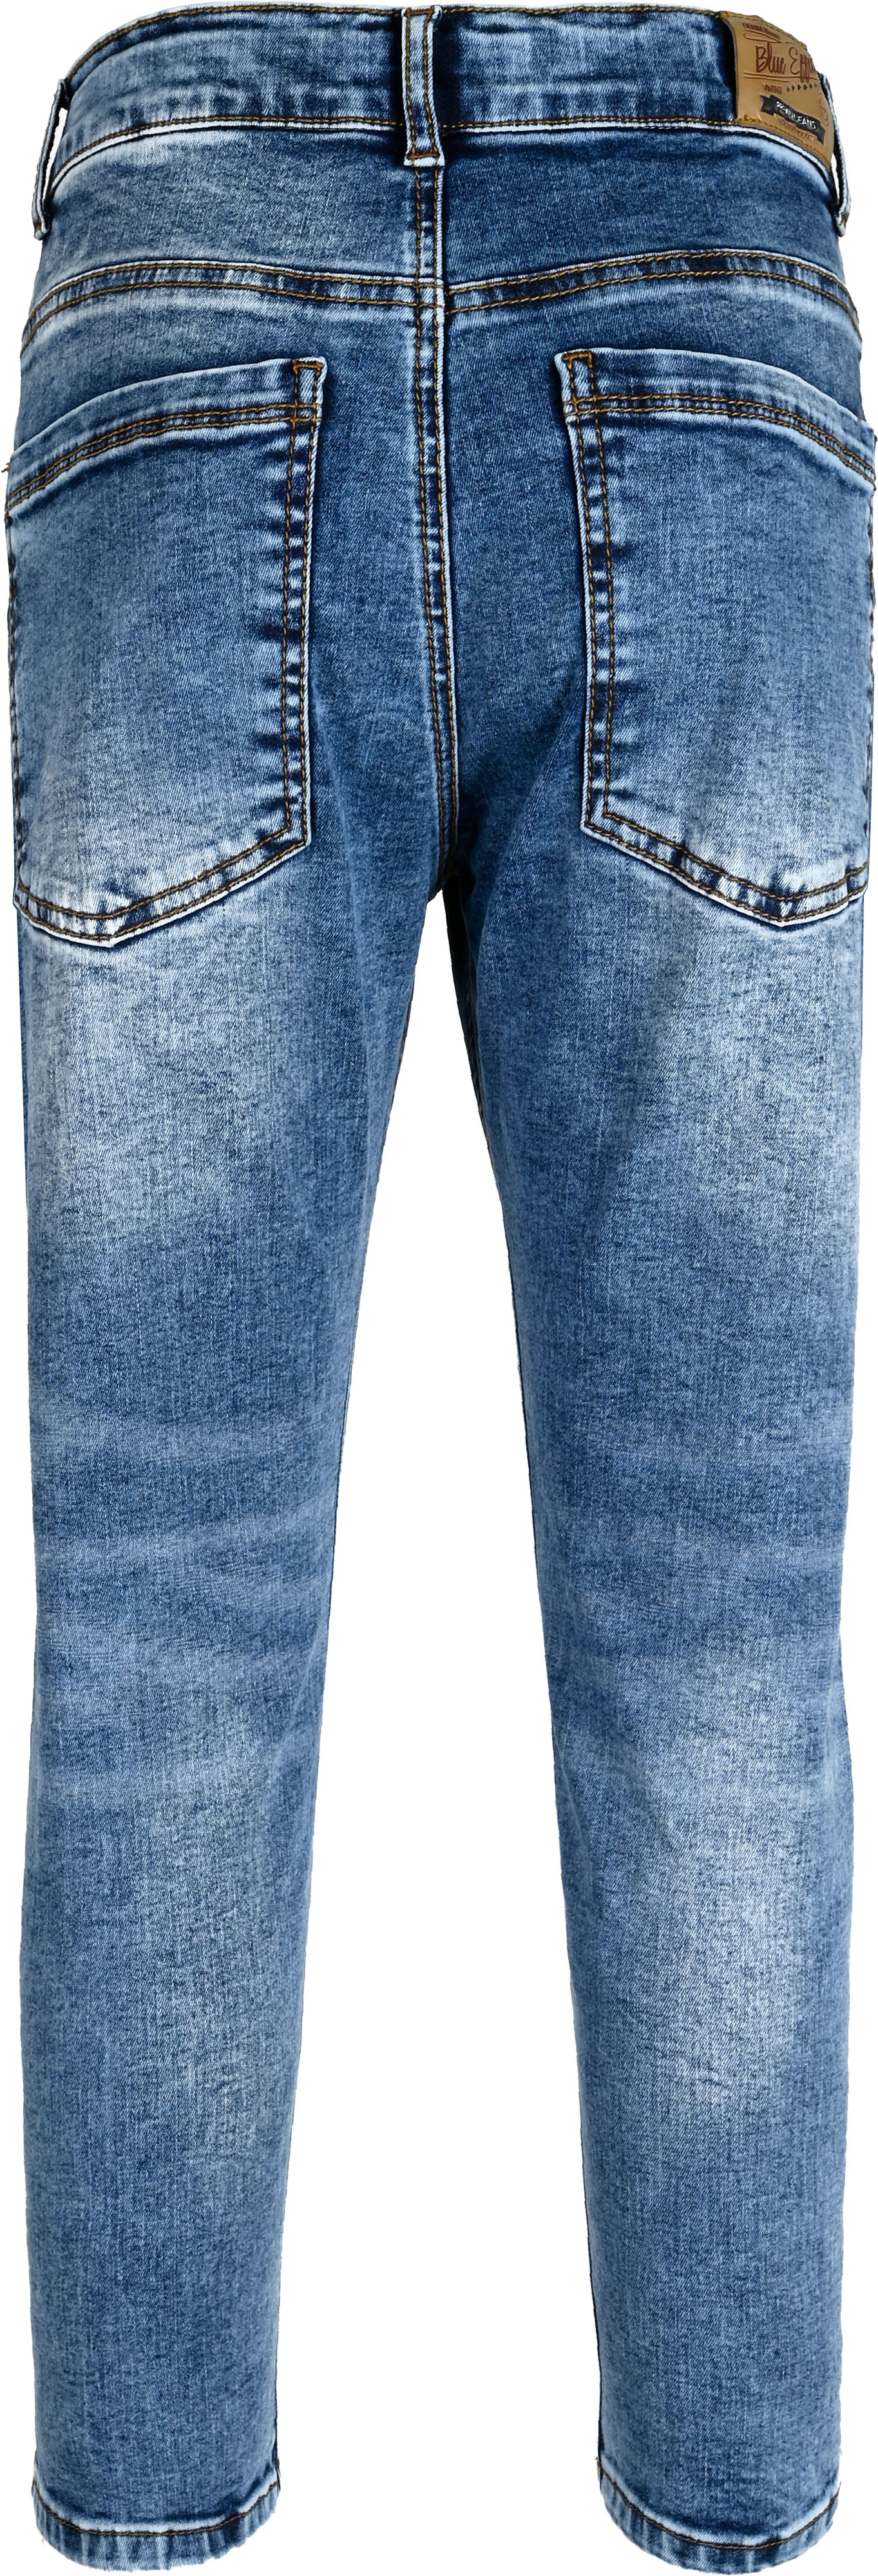 2813-NOS Boys Loose Fit Jeans verfügbar in Normal